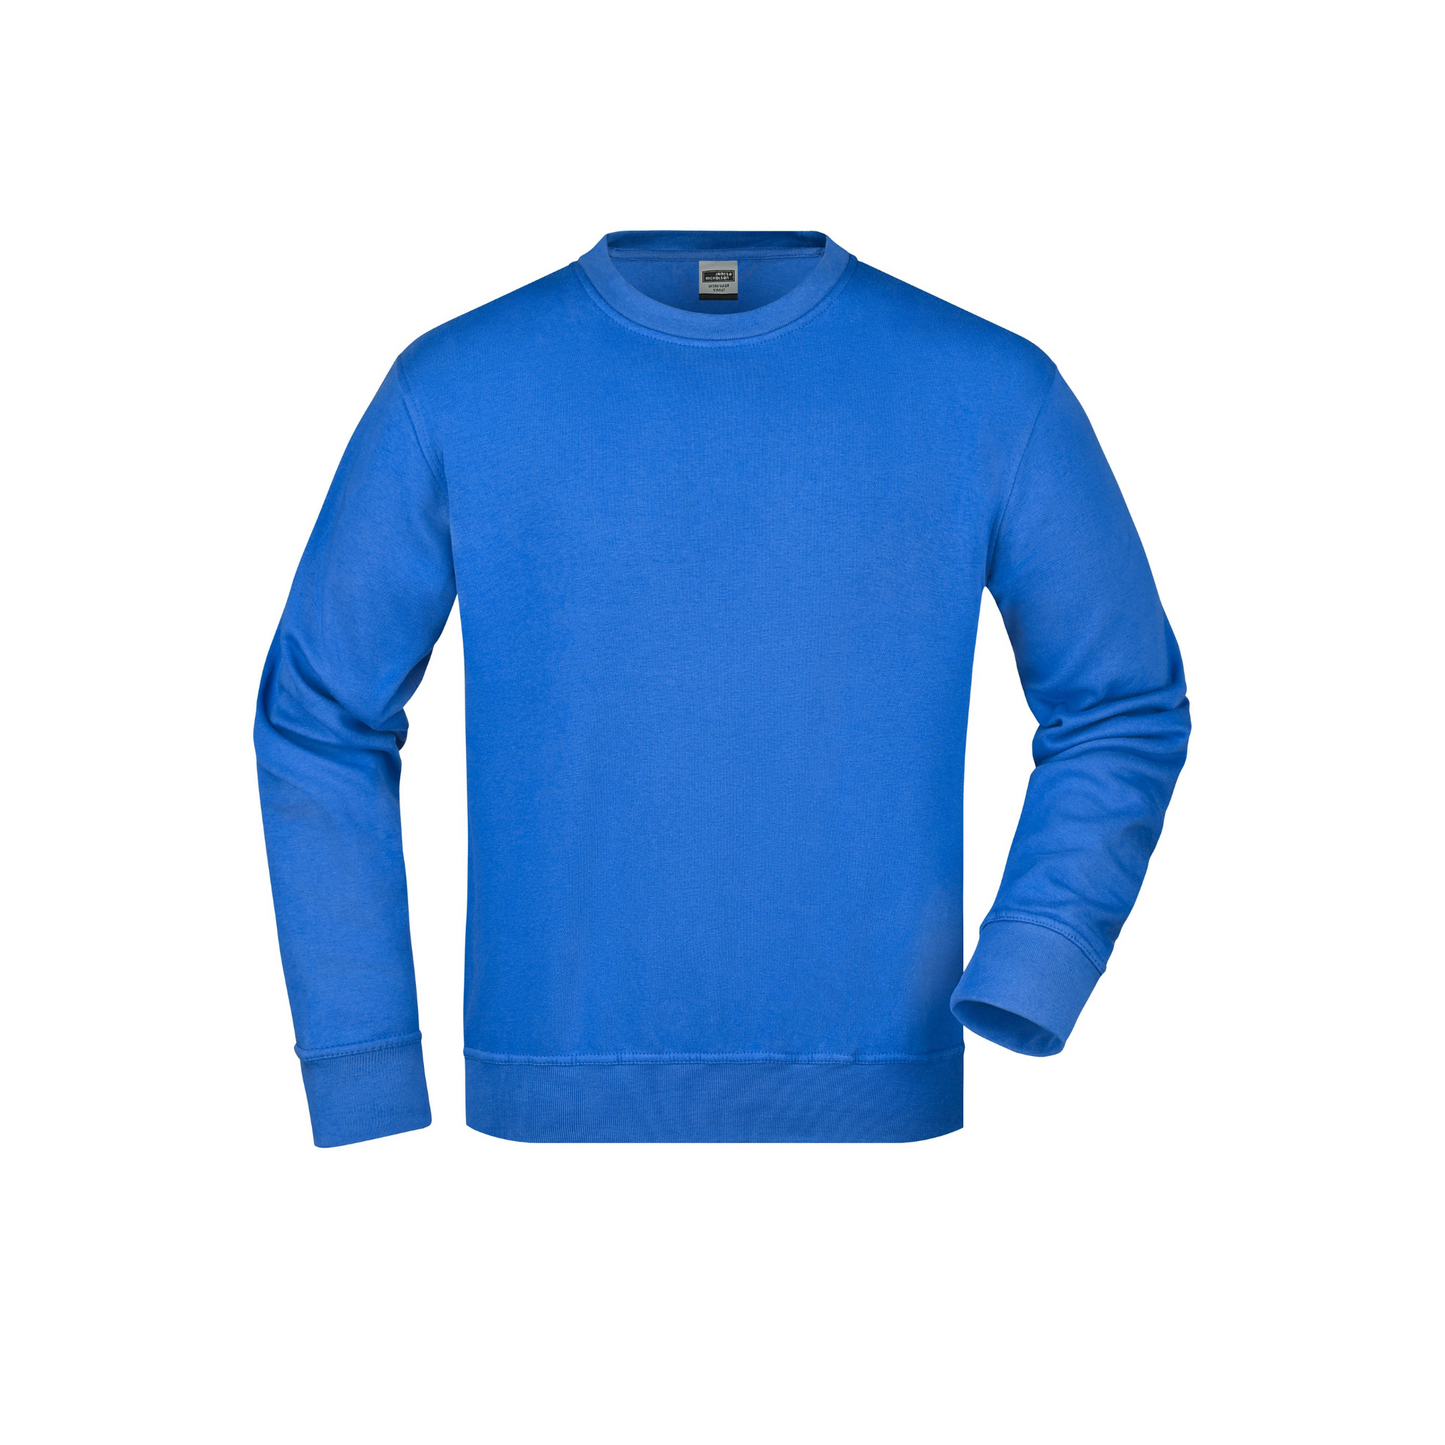 Budget Workwear Sweater (Men/ Unisex) (Muster)